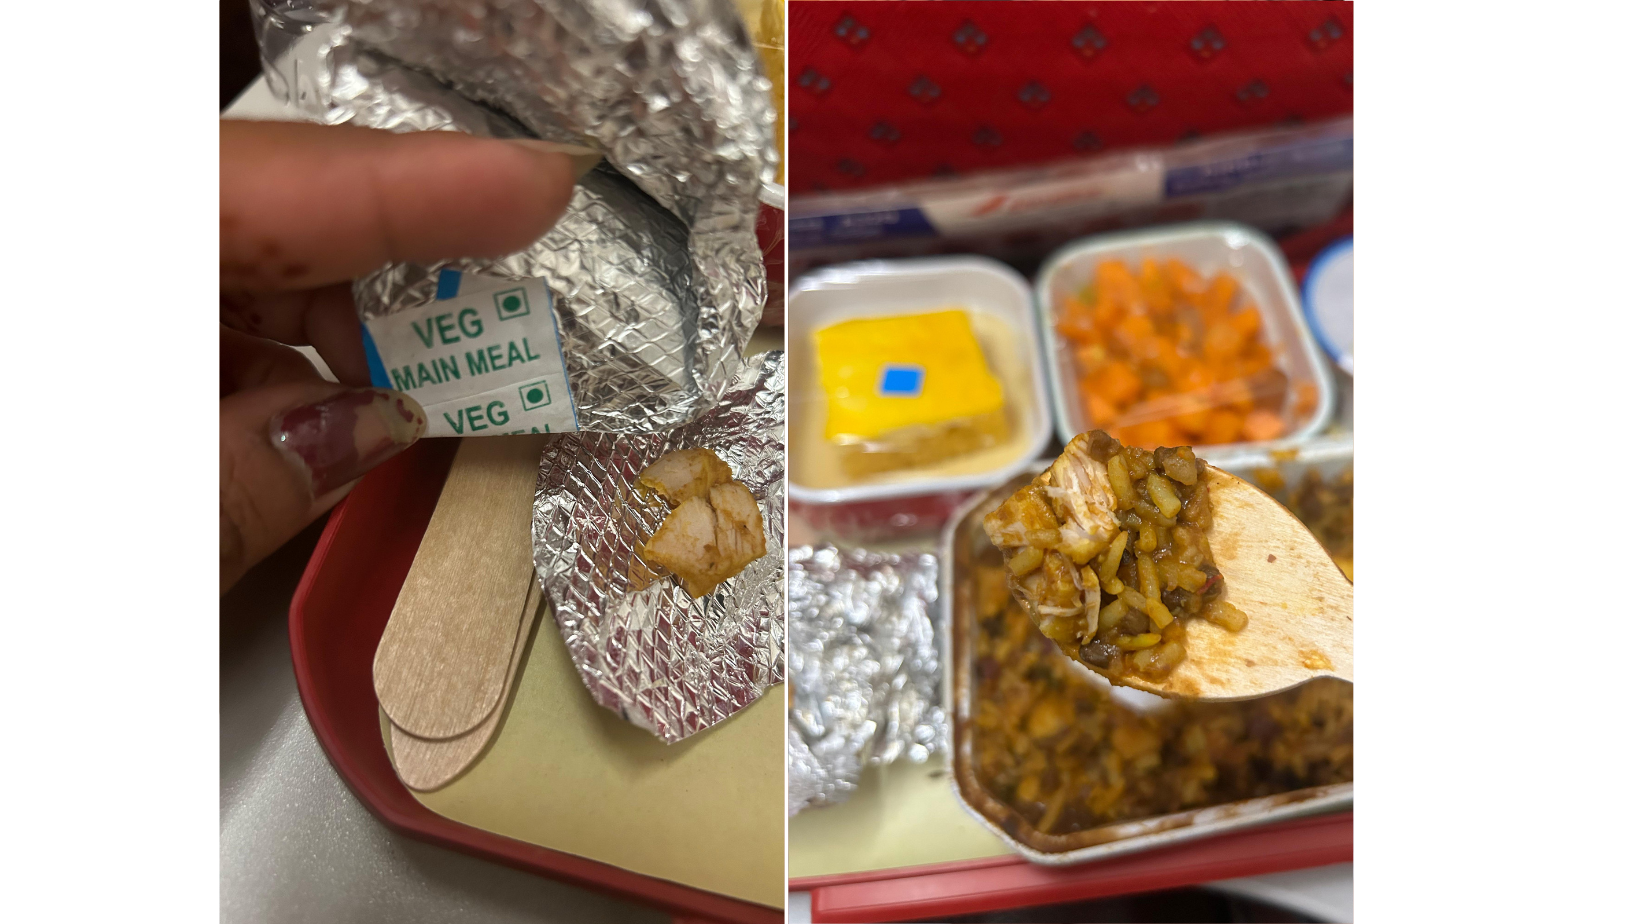 Passenger outraged after airline serves her non-veg meal